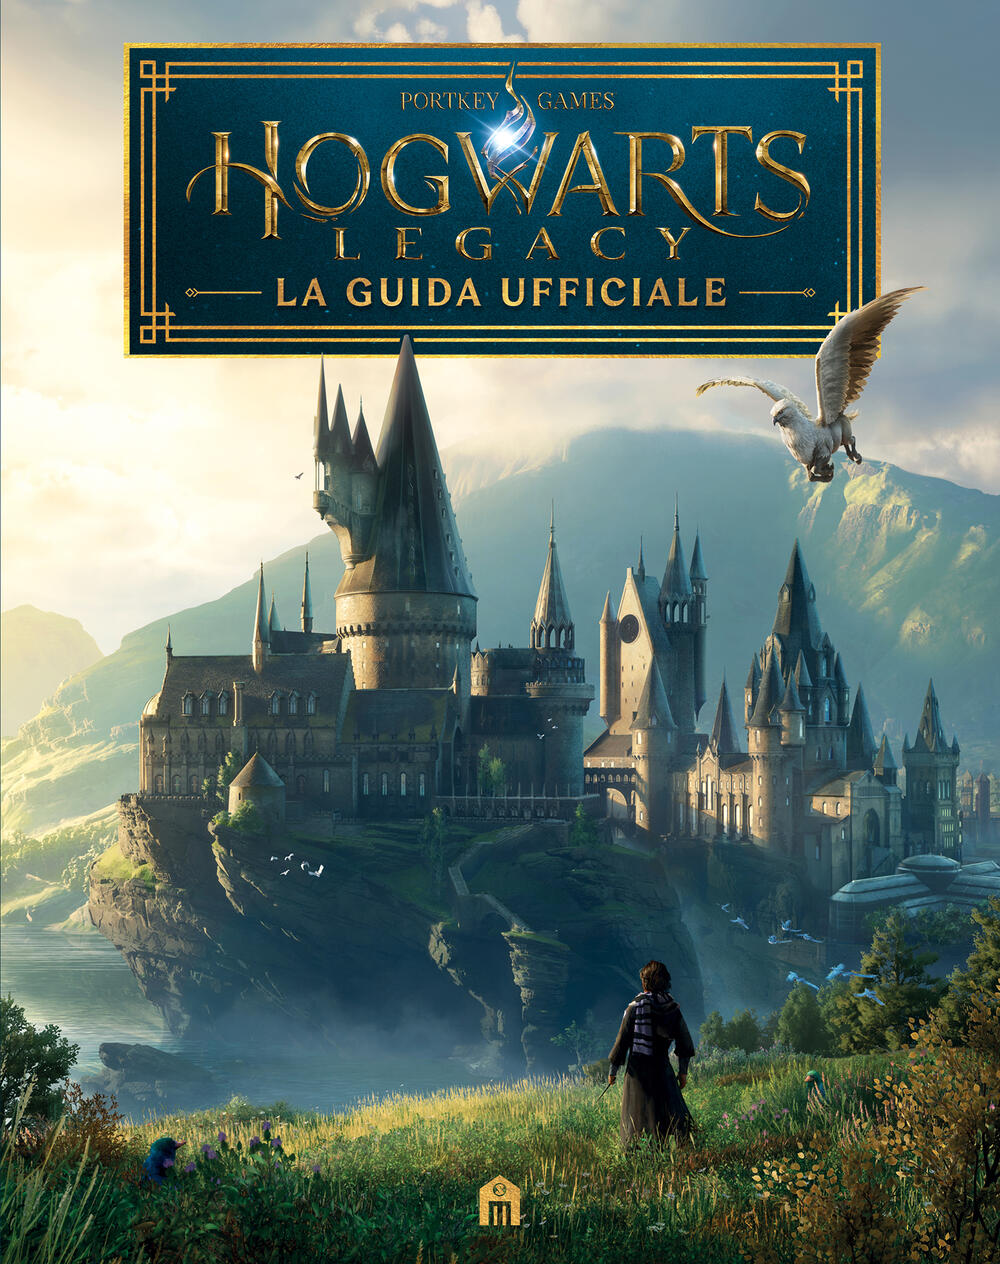 Hogwarts Legacy. La guida ufficiale di J.K.Rowling Wizarding World -  Brossura - J.K. ROWLING'S WIZARDING WORLD - Il Libraio